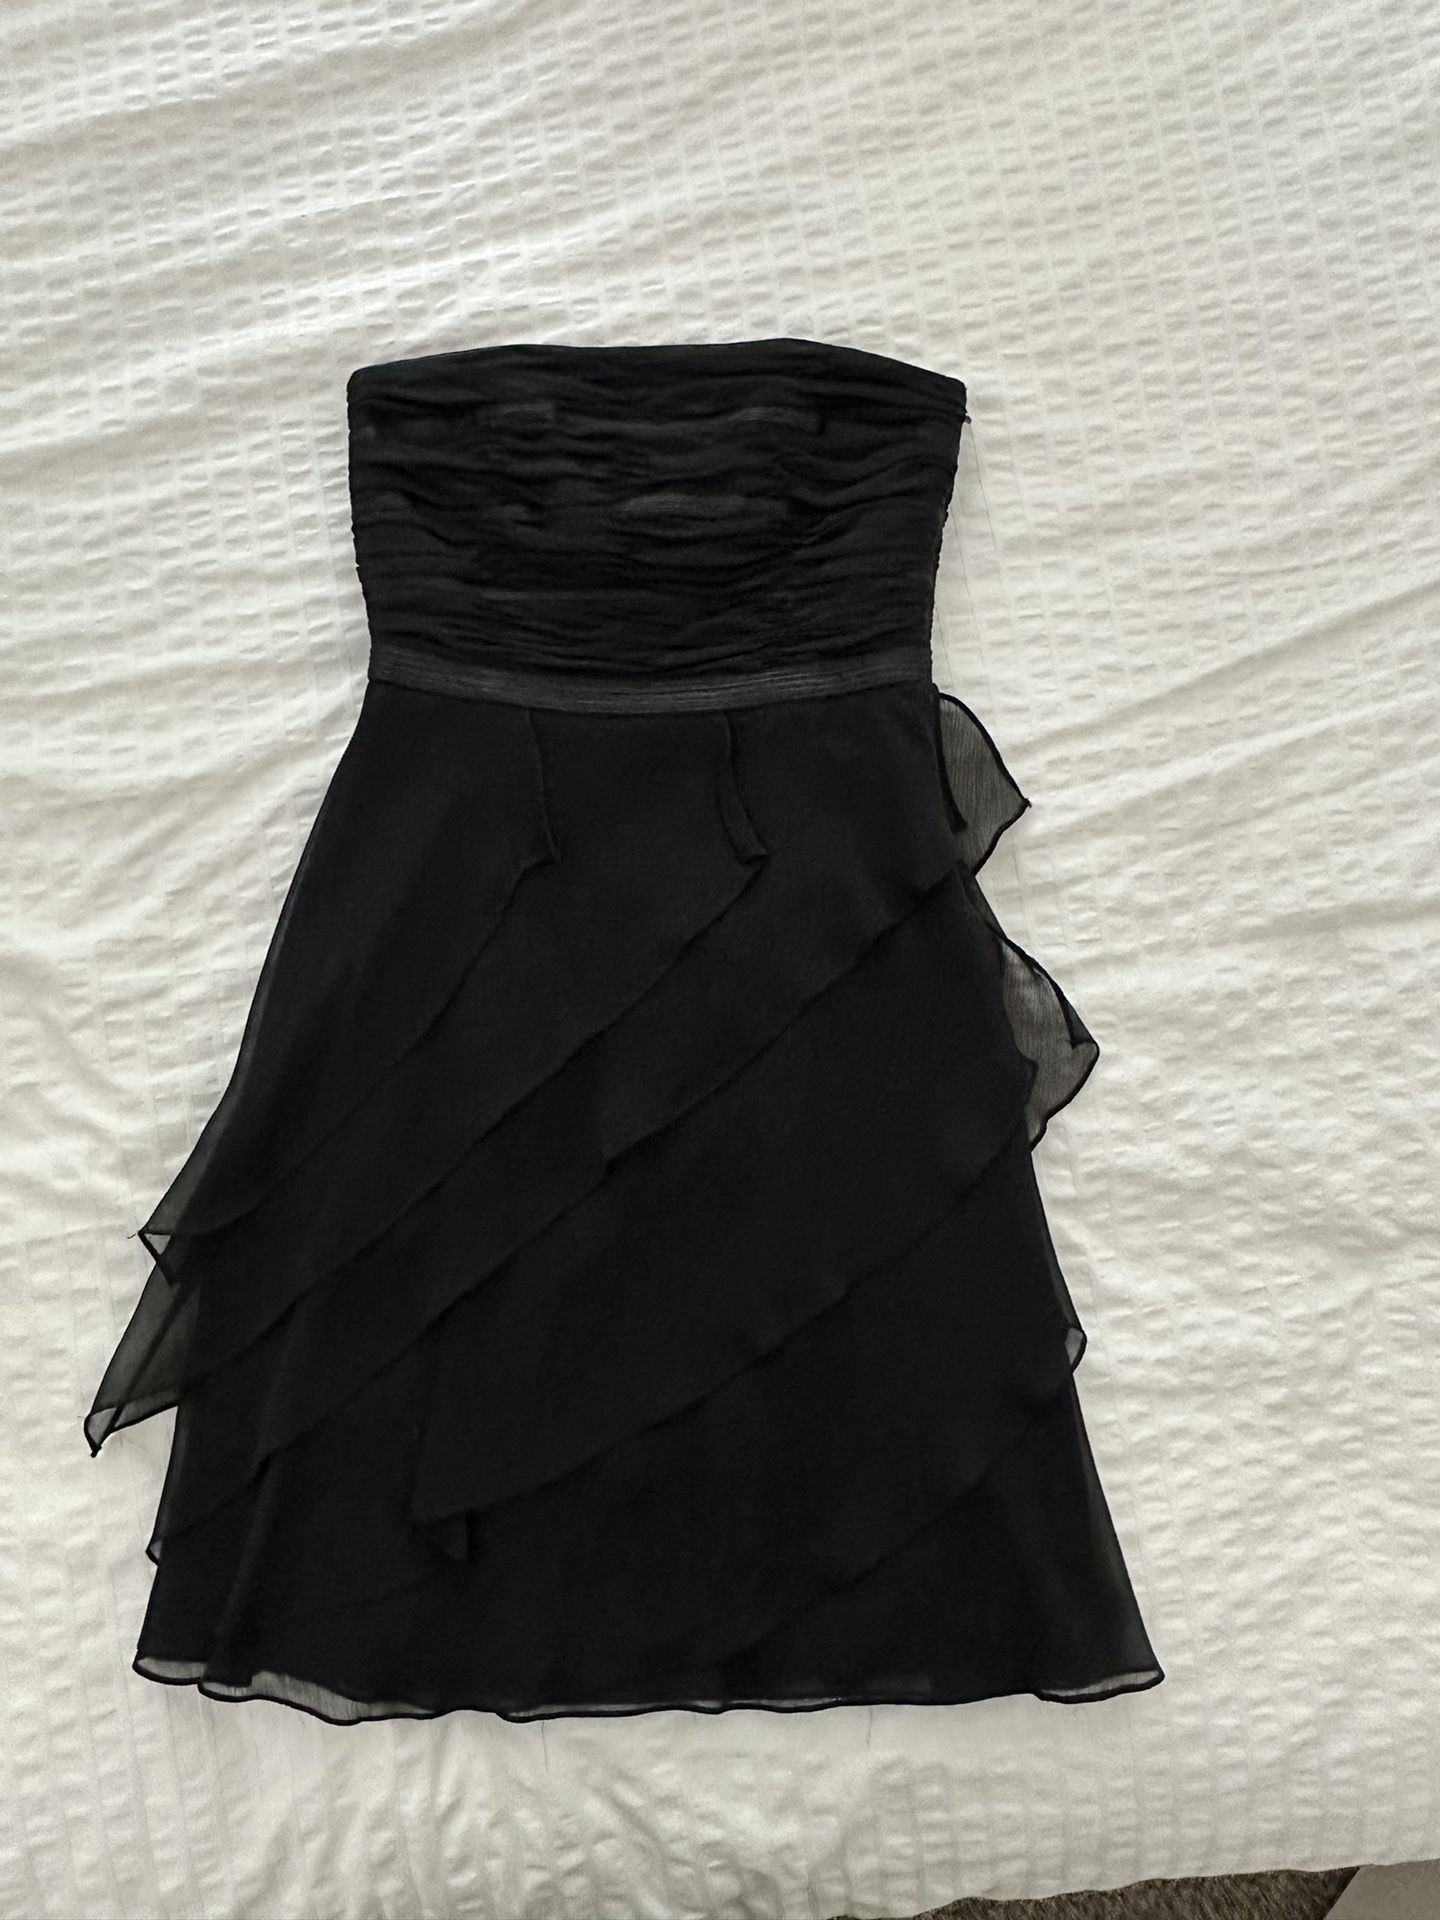 White House Black Market Black Strapless Dress size 4